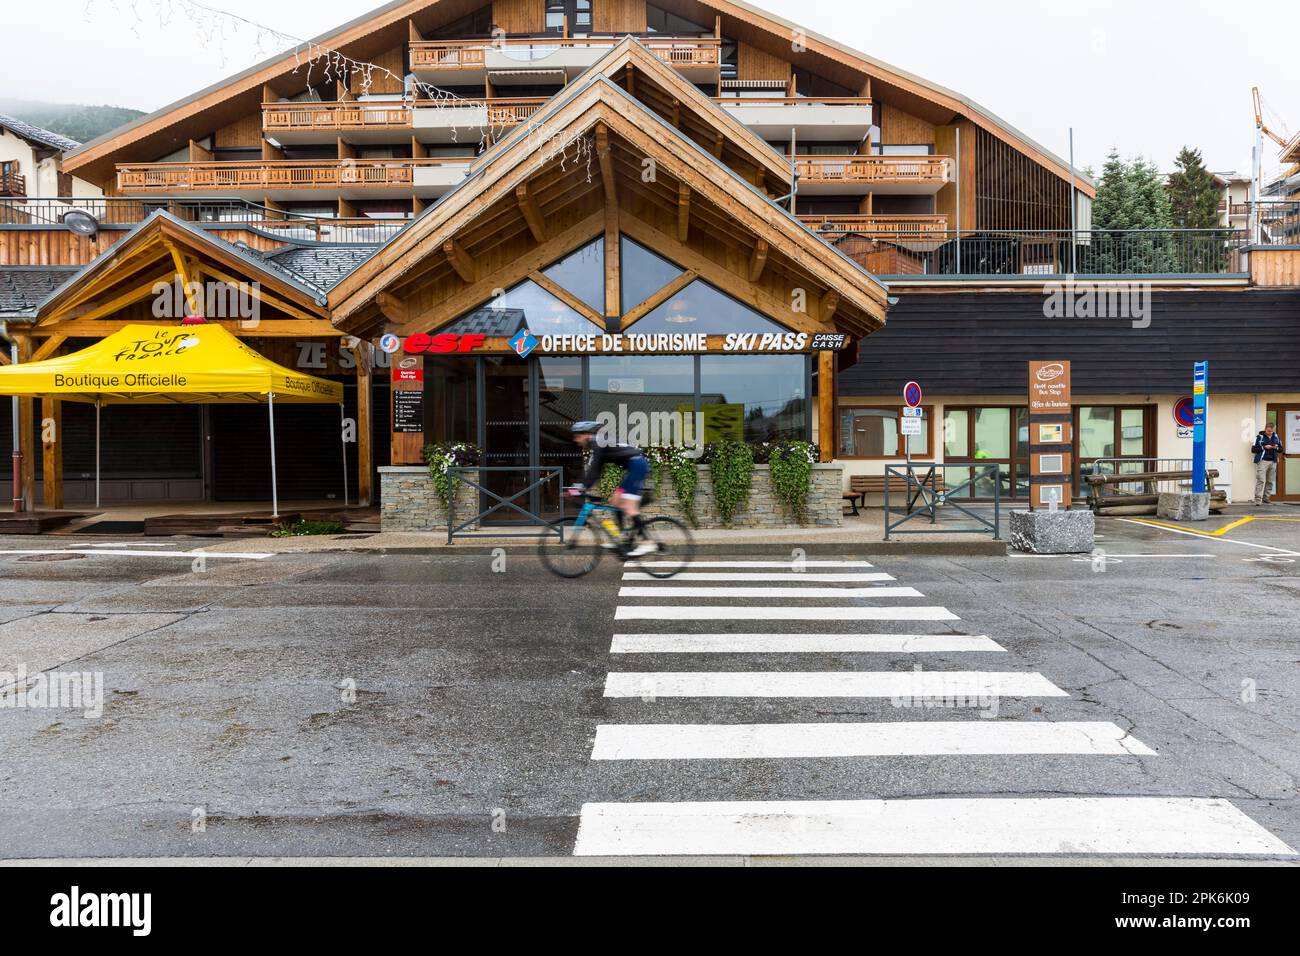 Winter sports resort, famous for the Tour de France, Alpe dHuez, Departement Isere, France Stock Photo